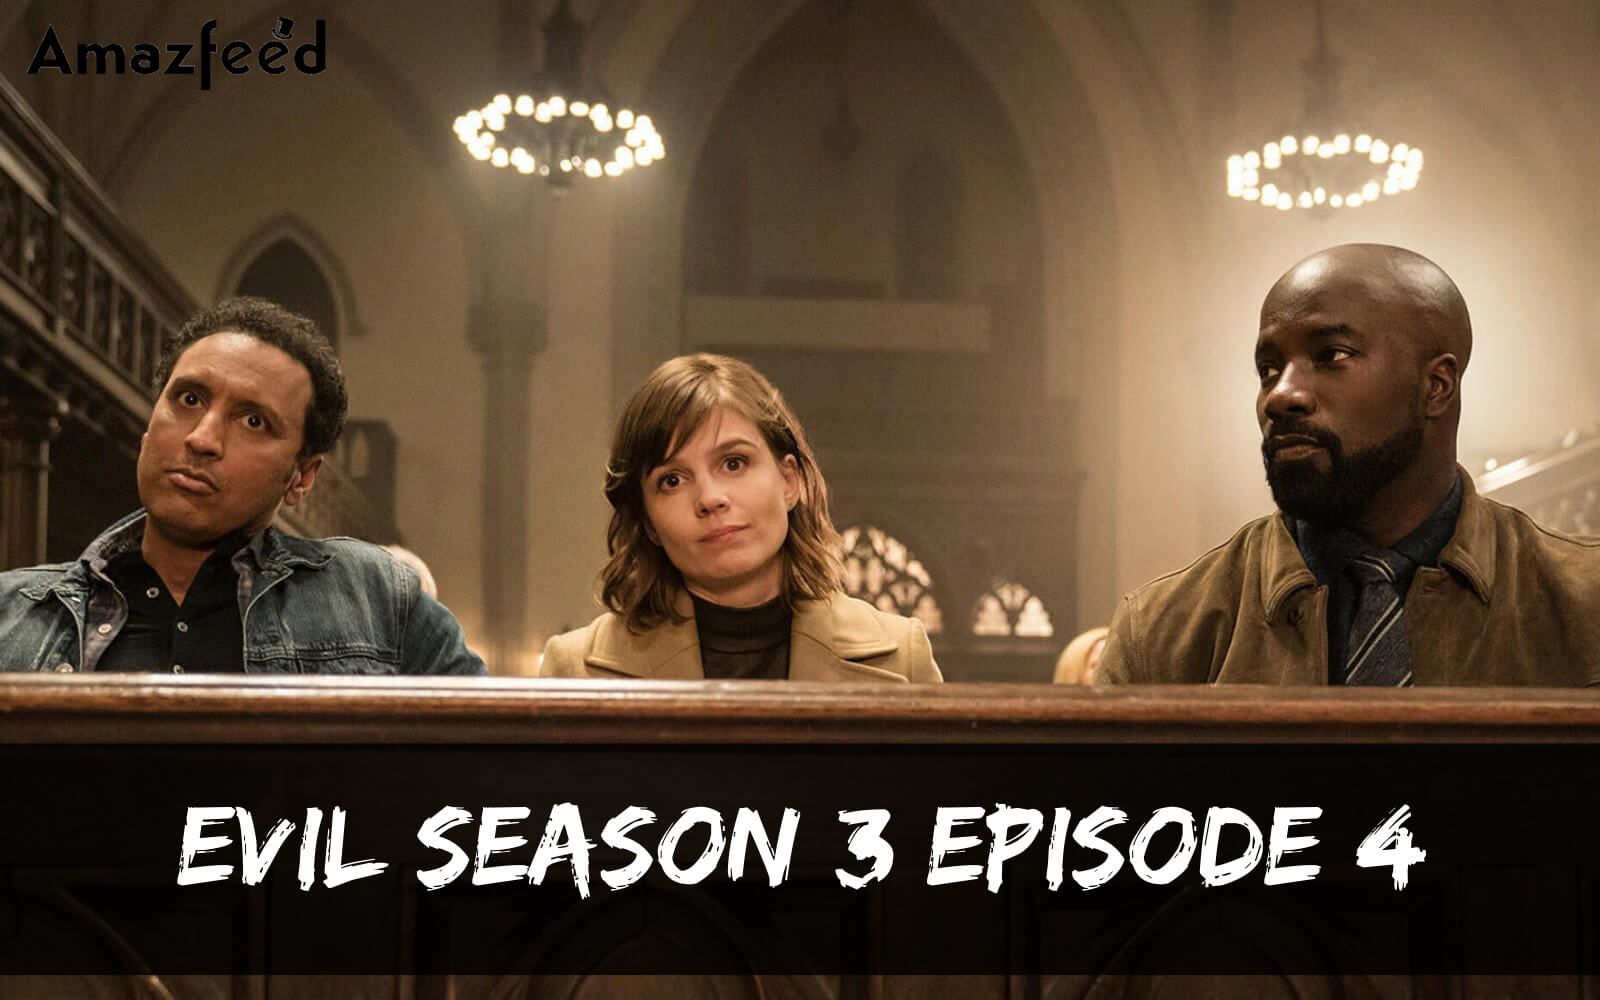 Evil season 3 Episode 4 release date